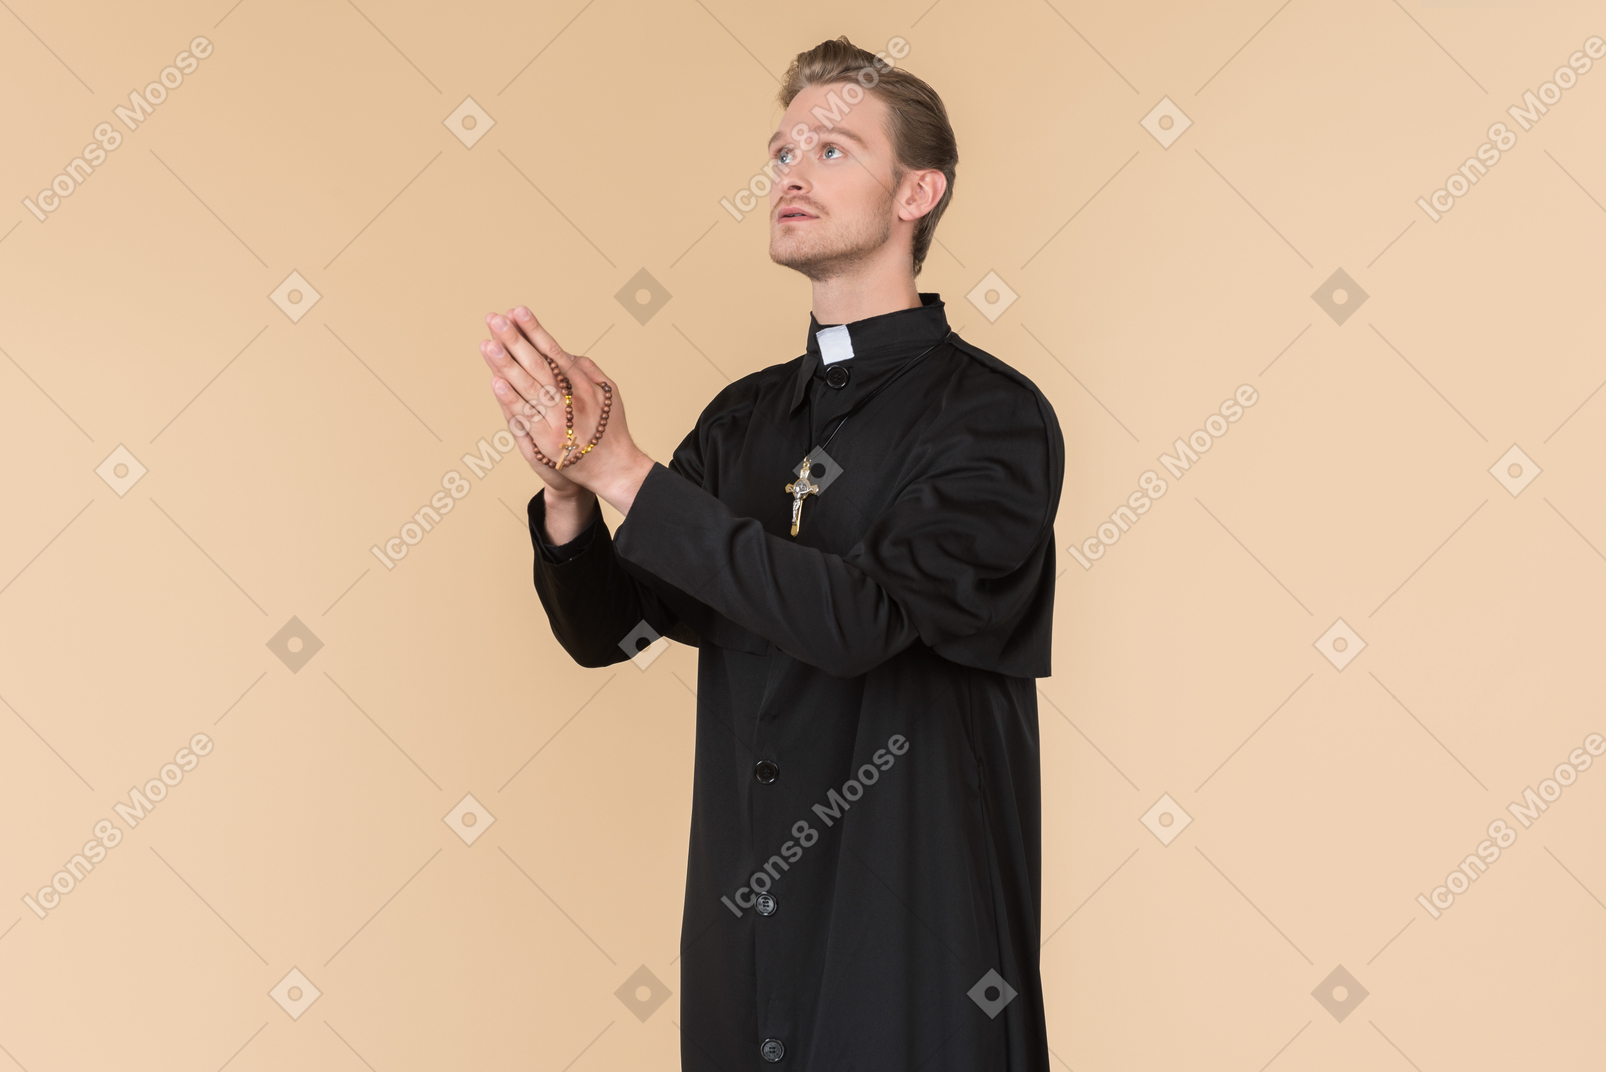 Catholic priest praying using prayer beads